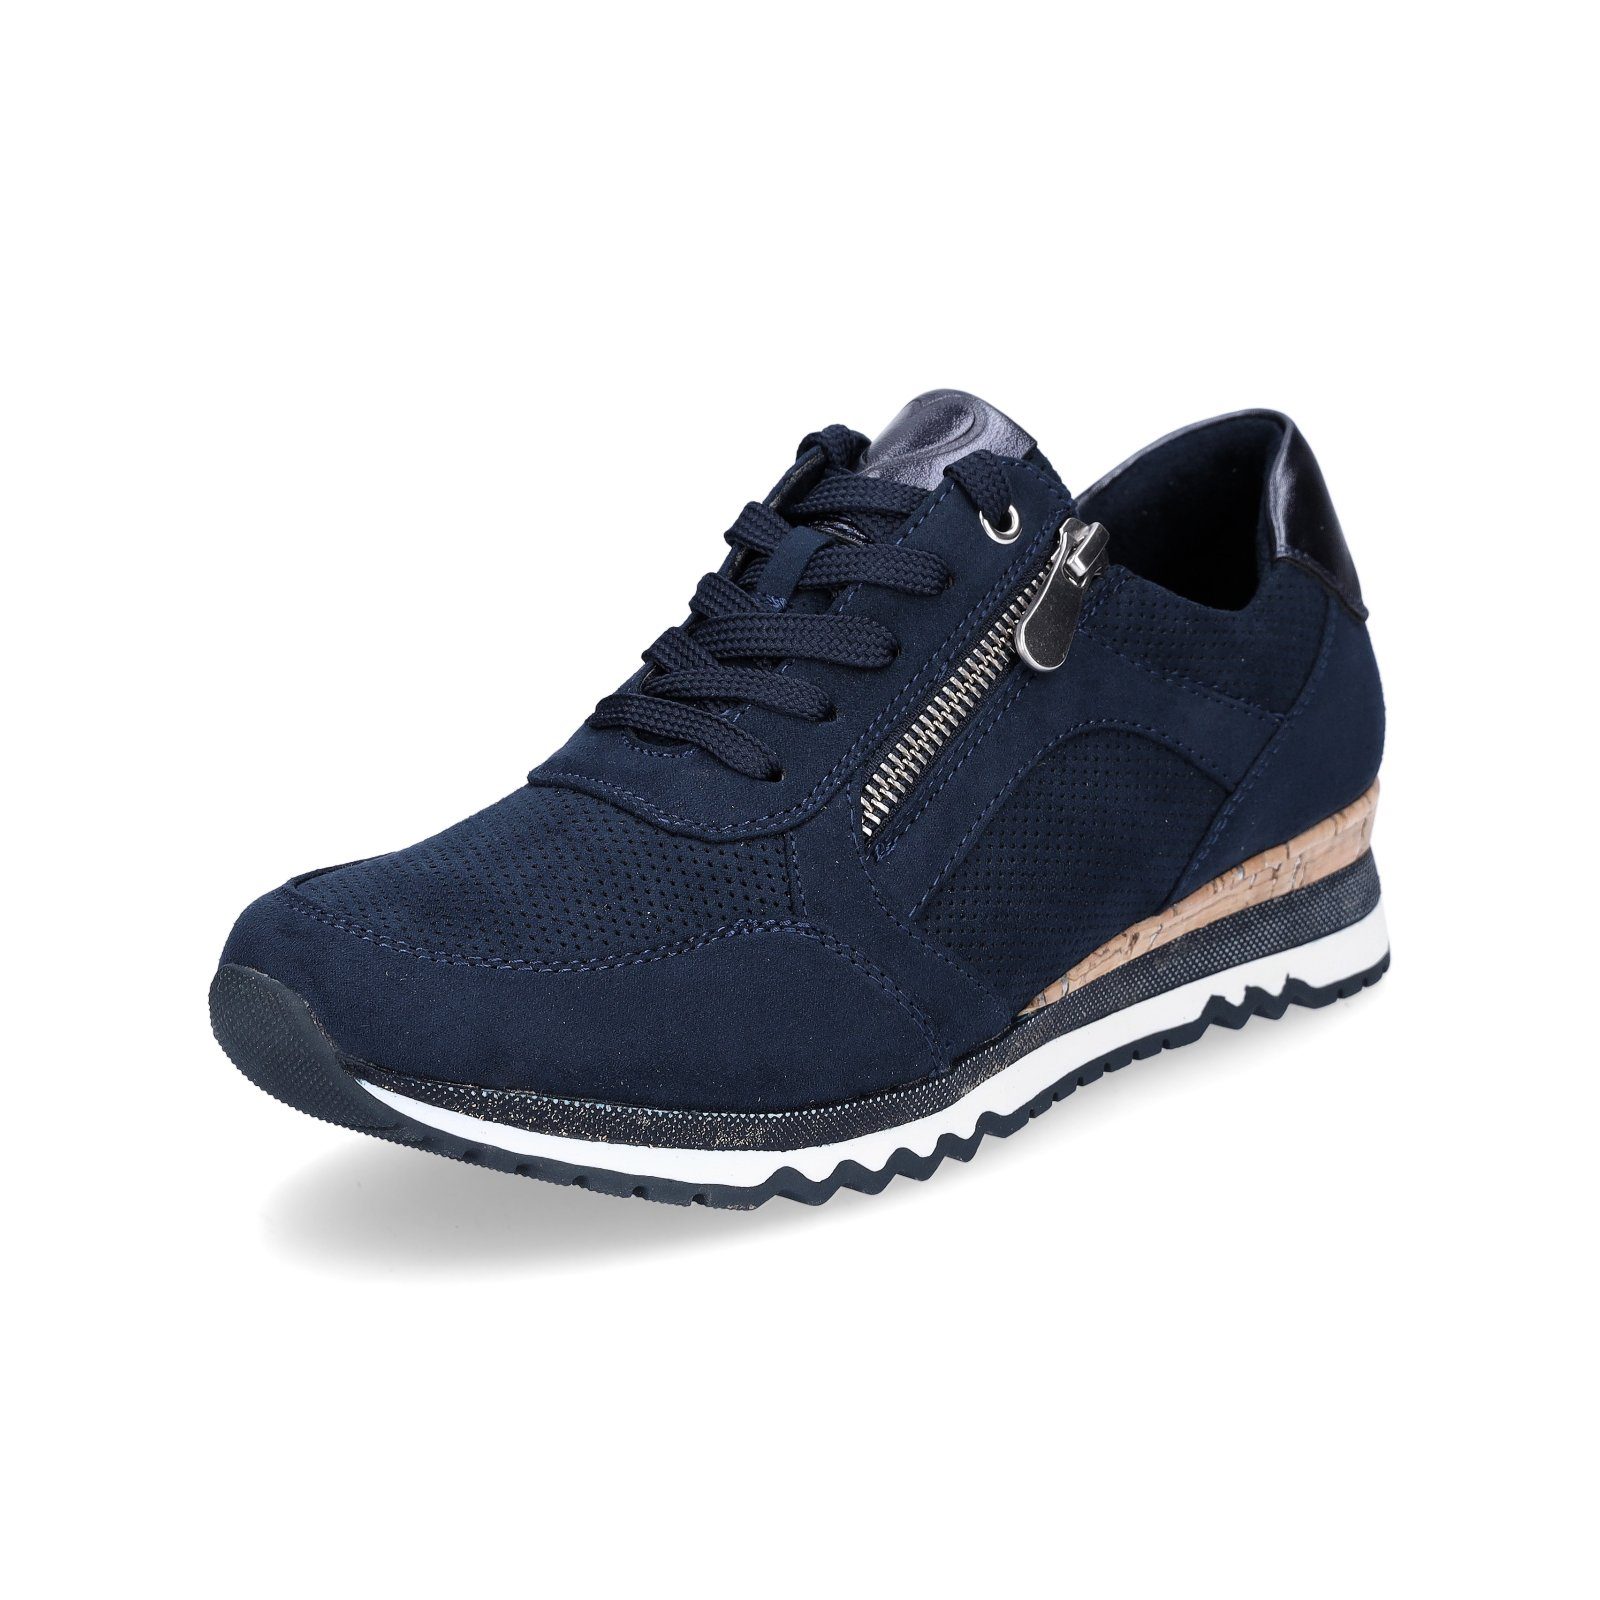 MARCO TOZZI Marco Tozzi Damen Sneaker navy blau Sneaker 890 NAVY COMB